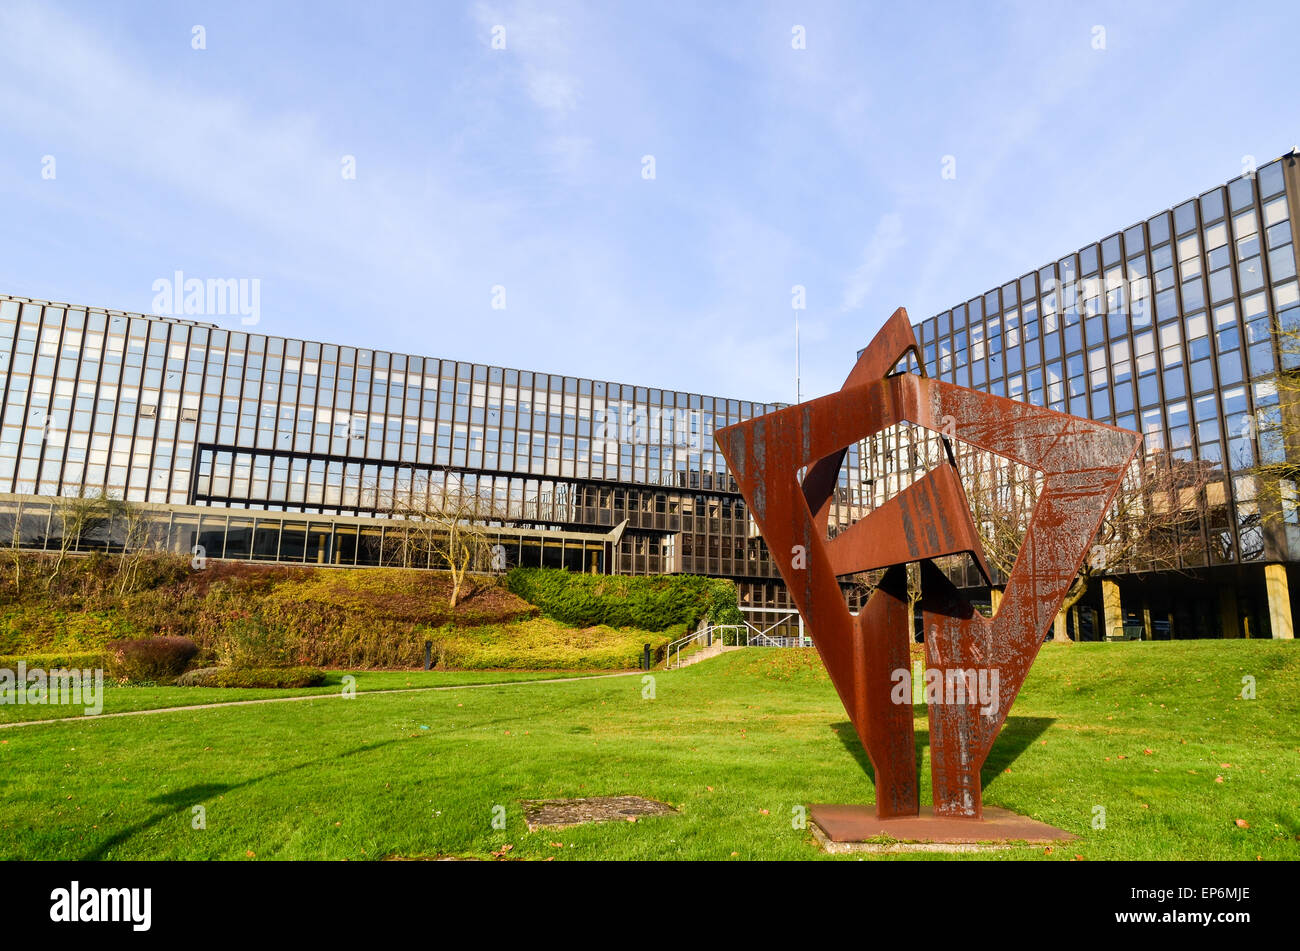 Escultura en la Comisión Europea (Bâtiment Jean Monnet) en el barrio europeo, Kirchberg, Luxemburgo Foto de stock